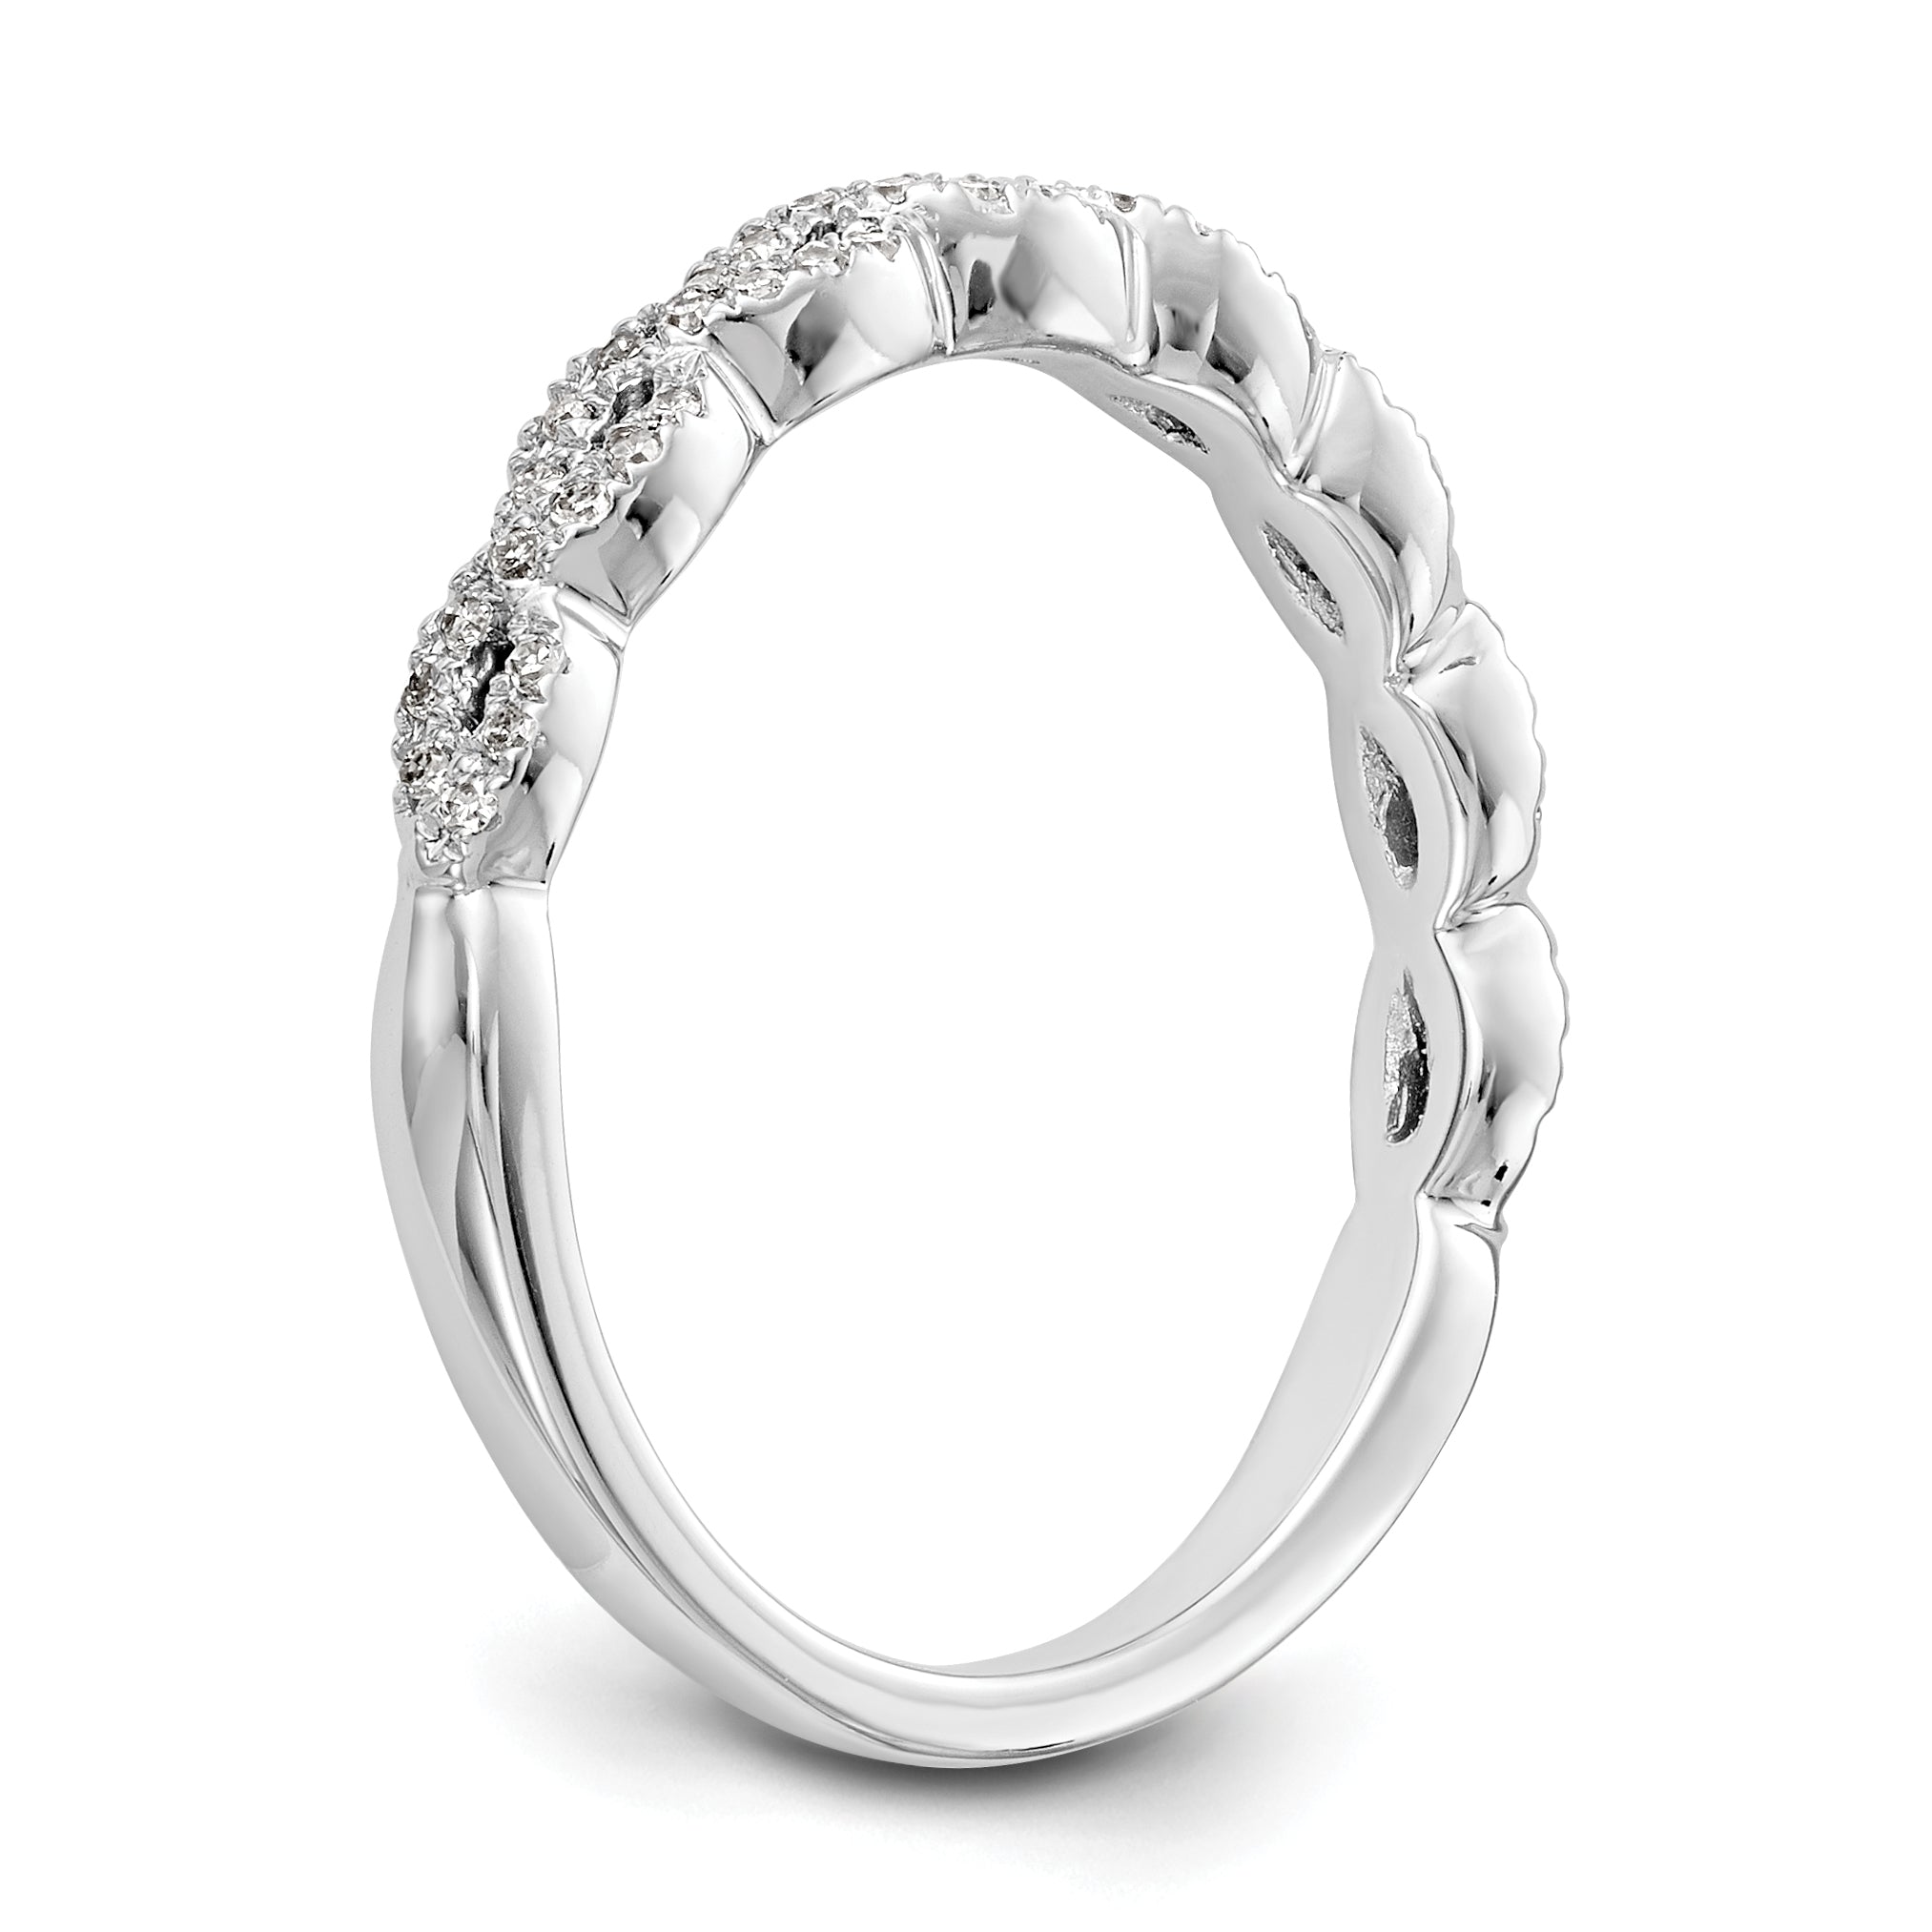 14K White Gold Twist Design 1/6 carat Complete Diamond Band